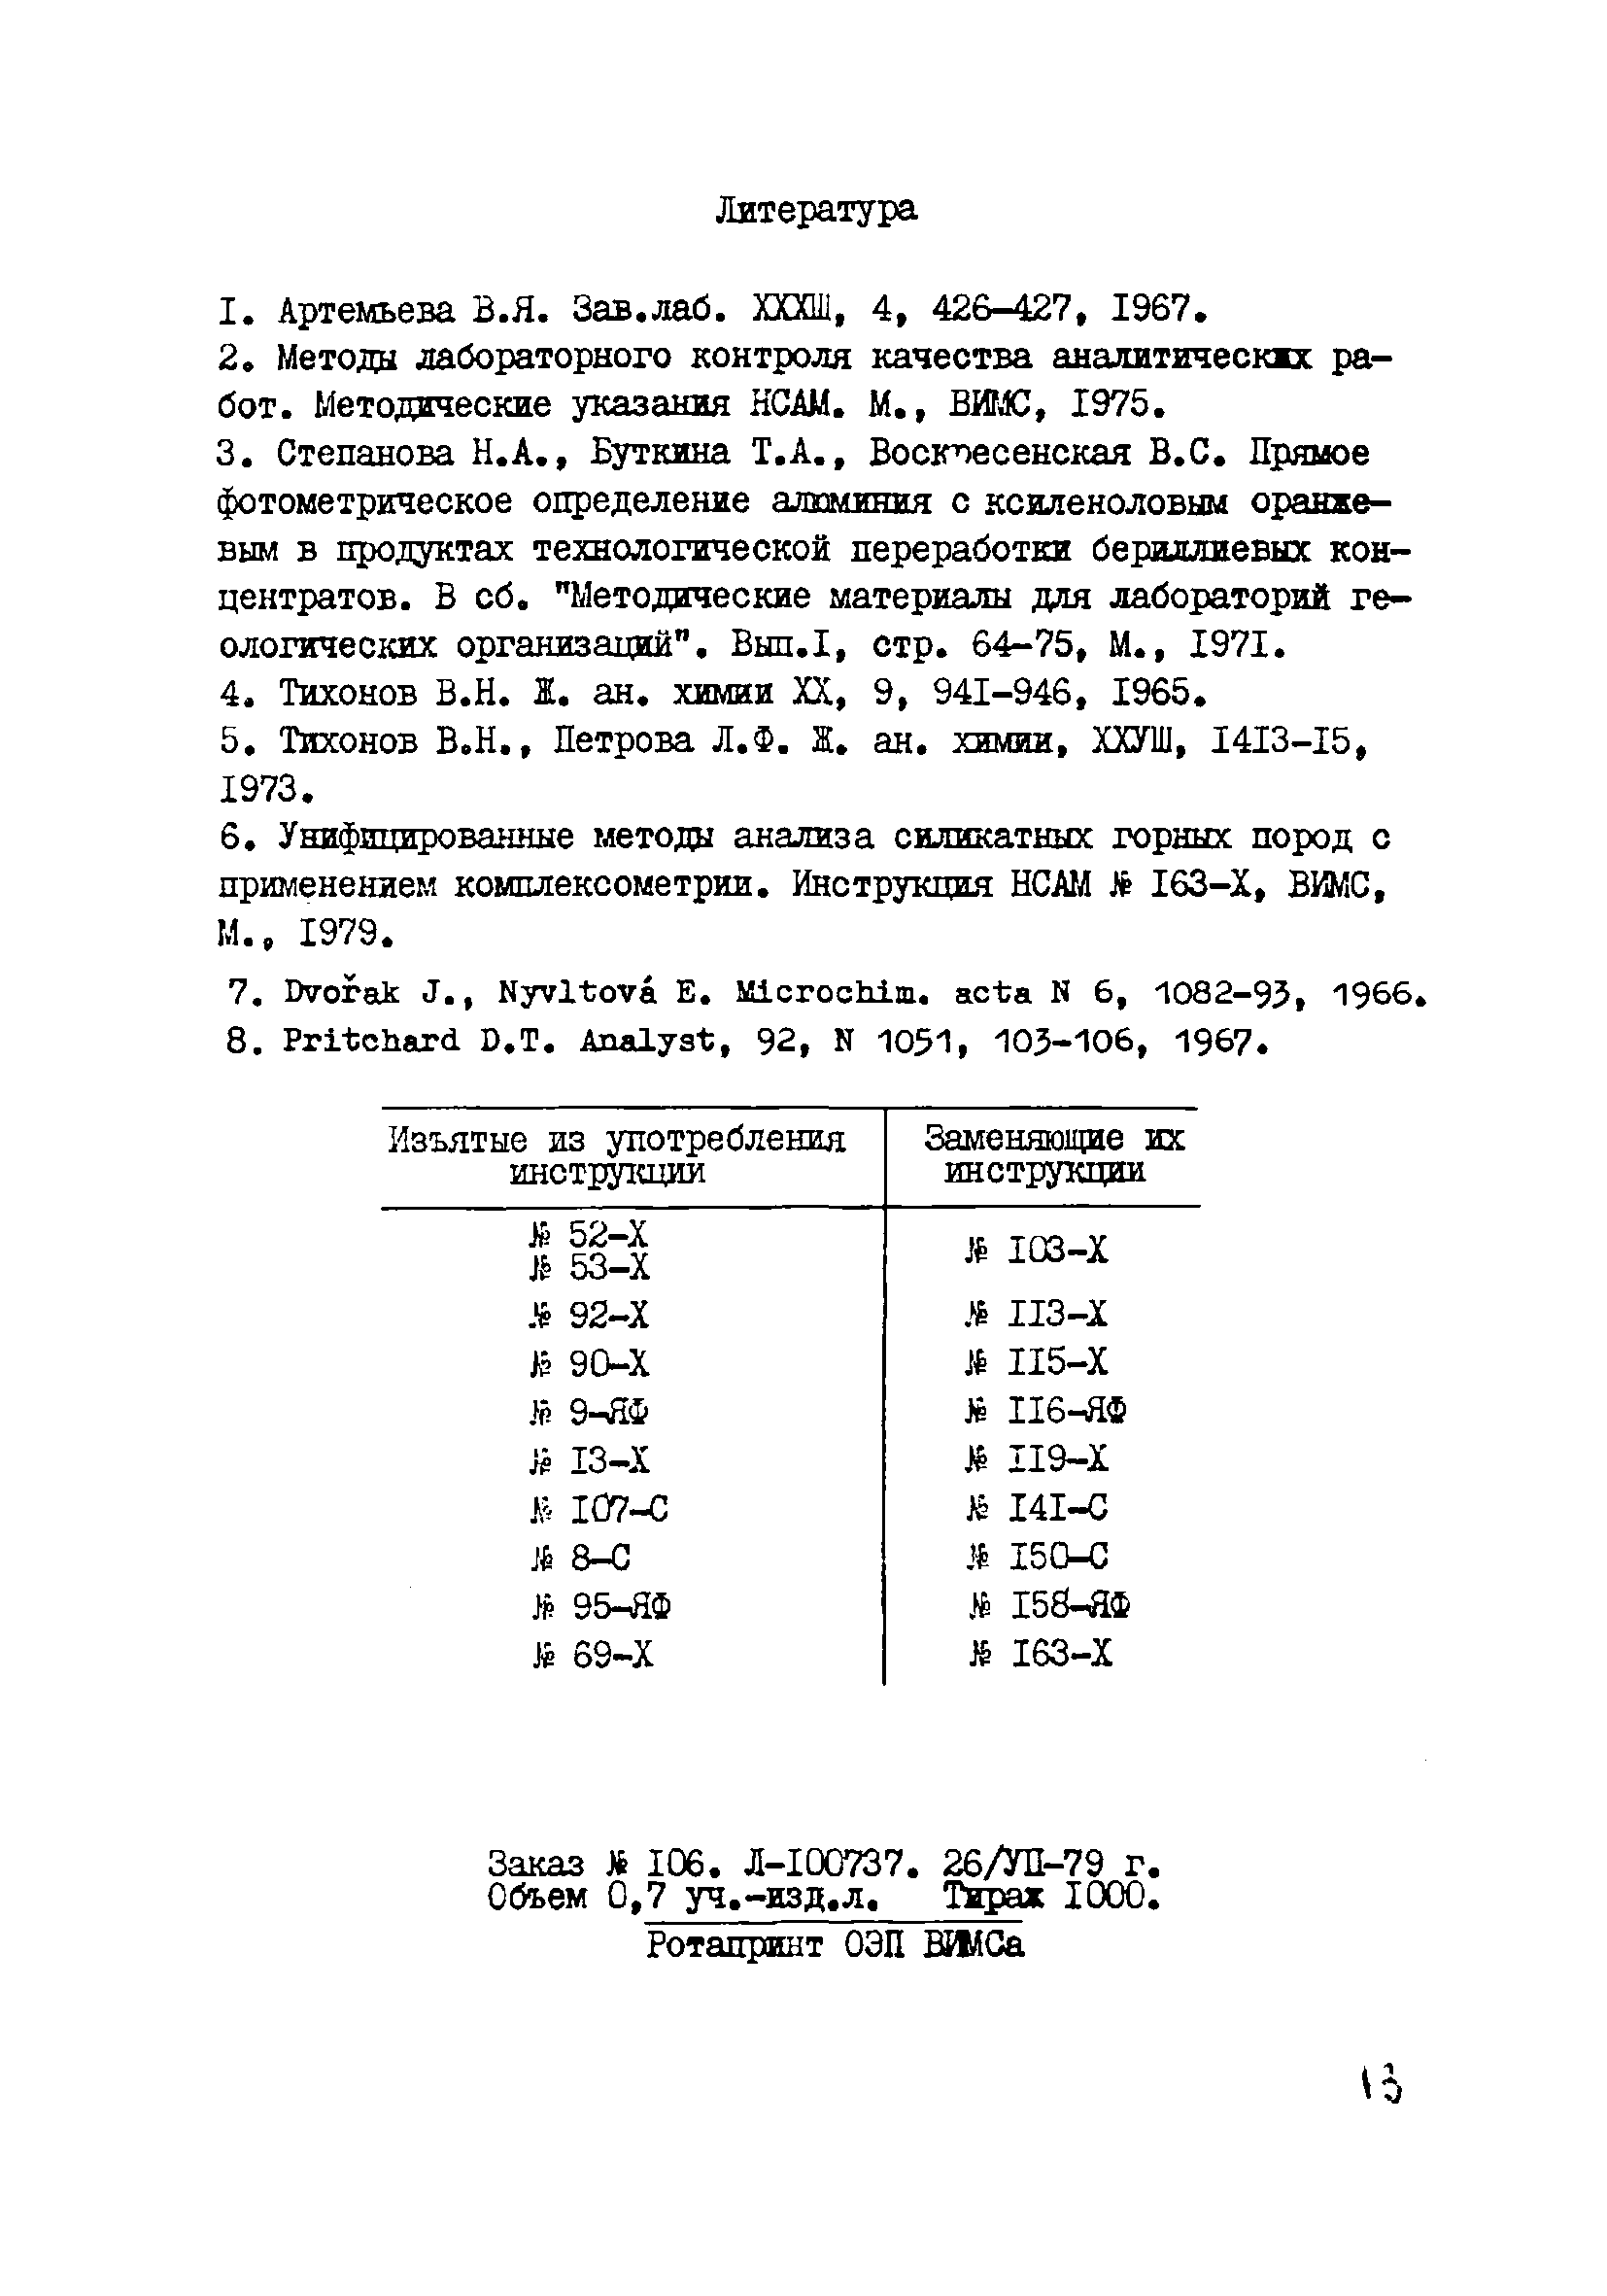 Инструкция НСАМ 165-Х